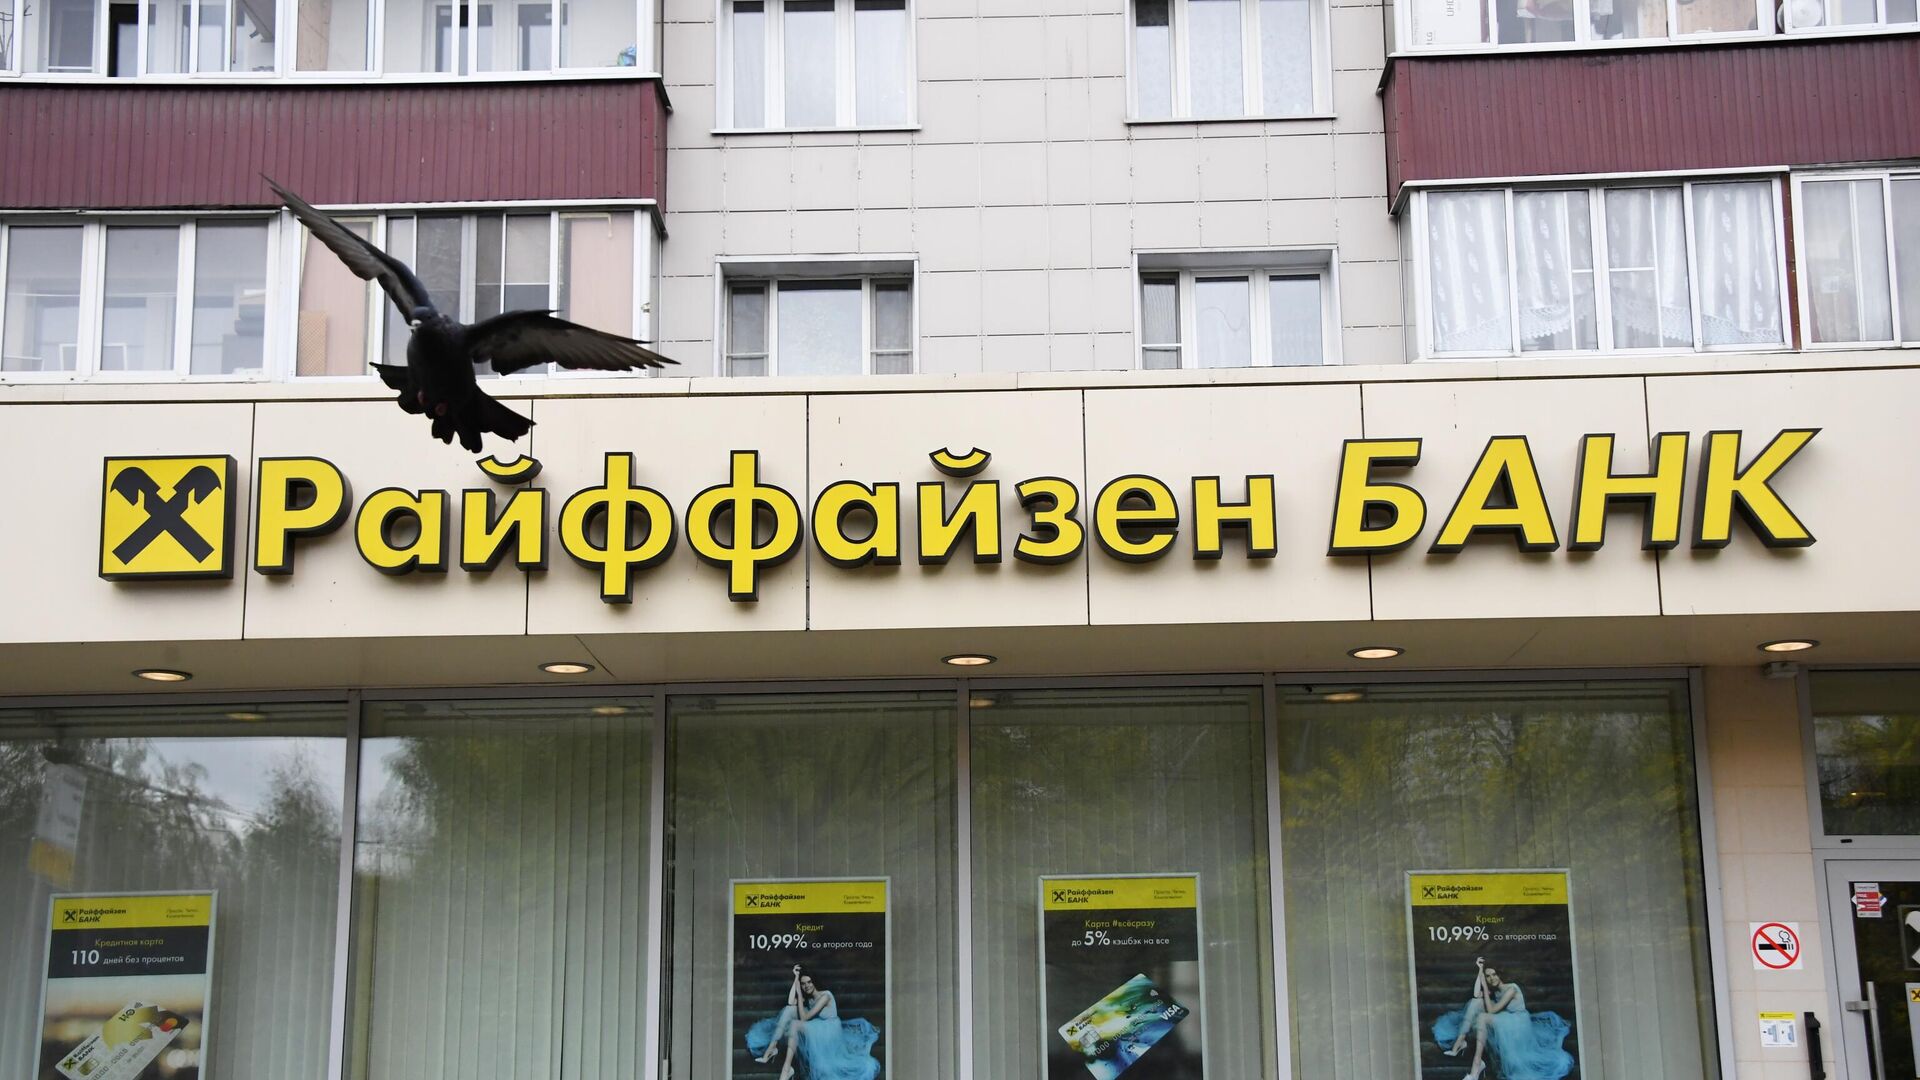 Захват казино в москве 14 08 2014 года покер онлайн бесплатно на фантики